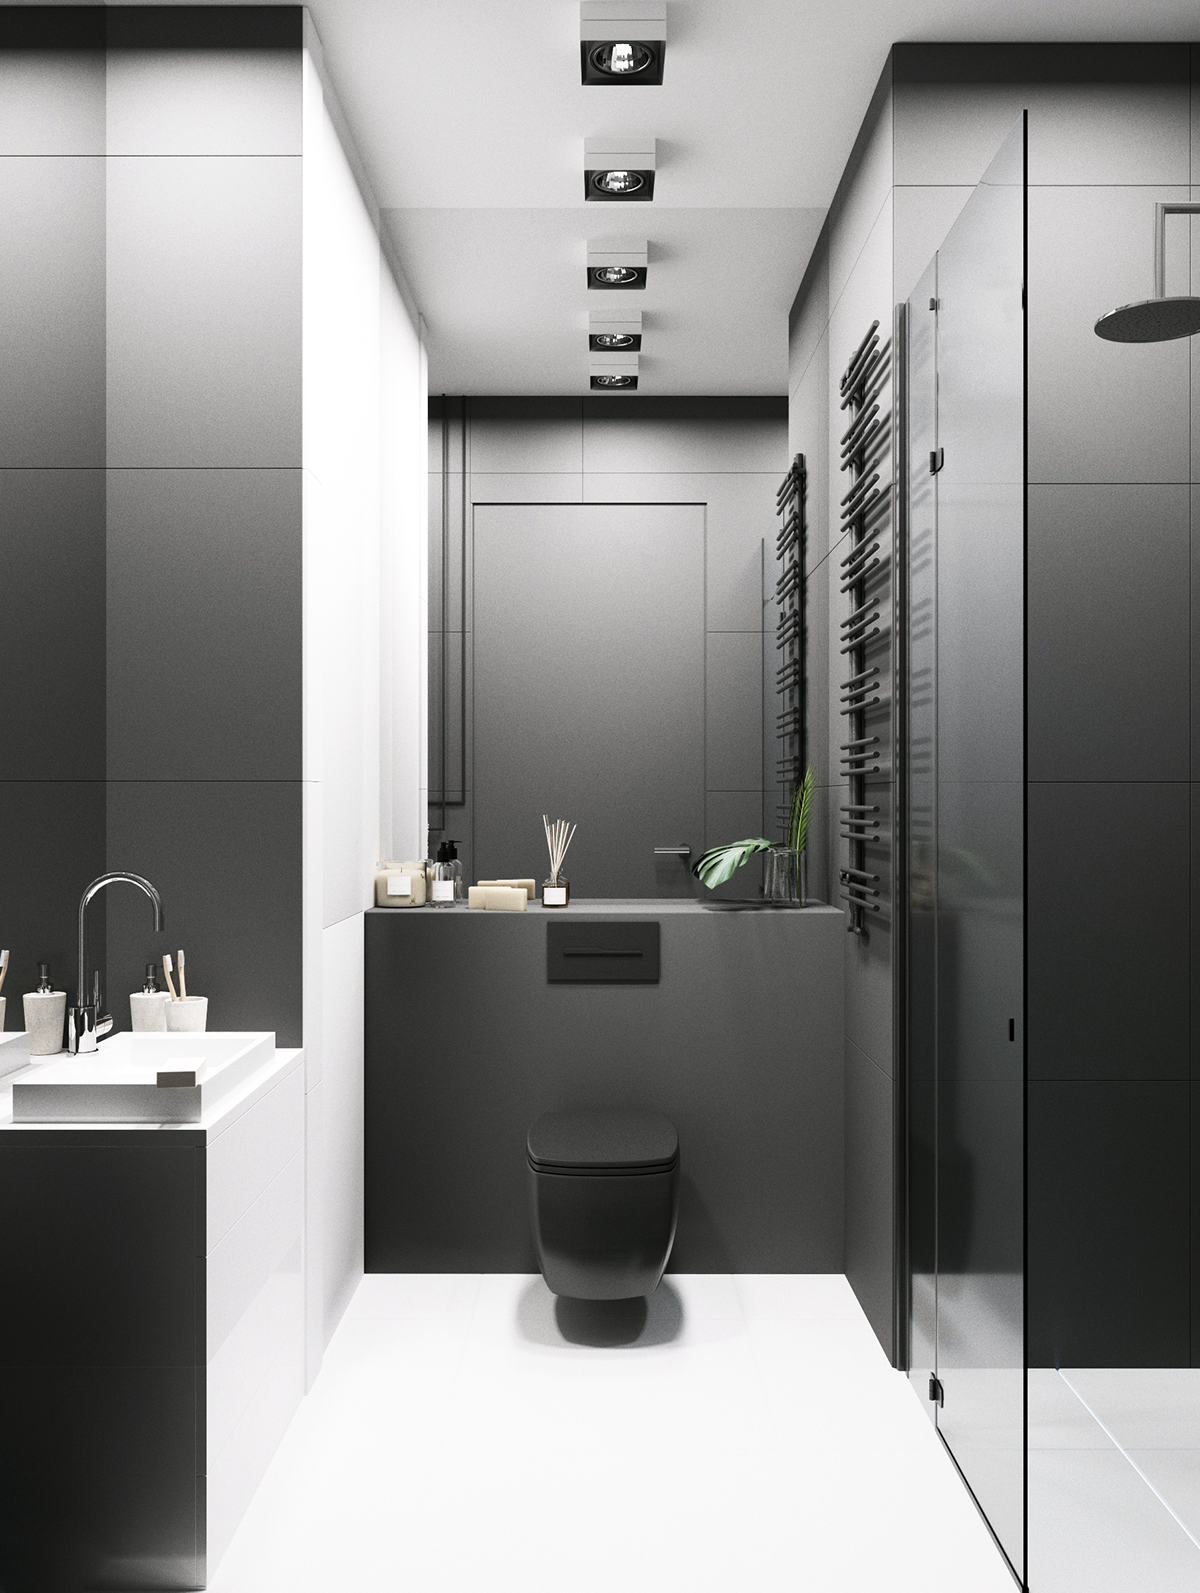 living room minimalistic modern Interior desgn architecture wc toilet kitchen 3ds max